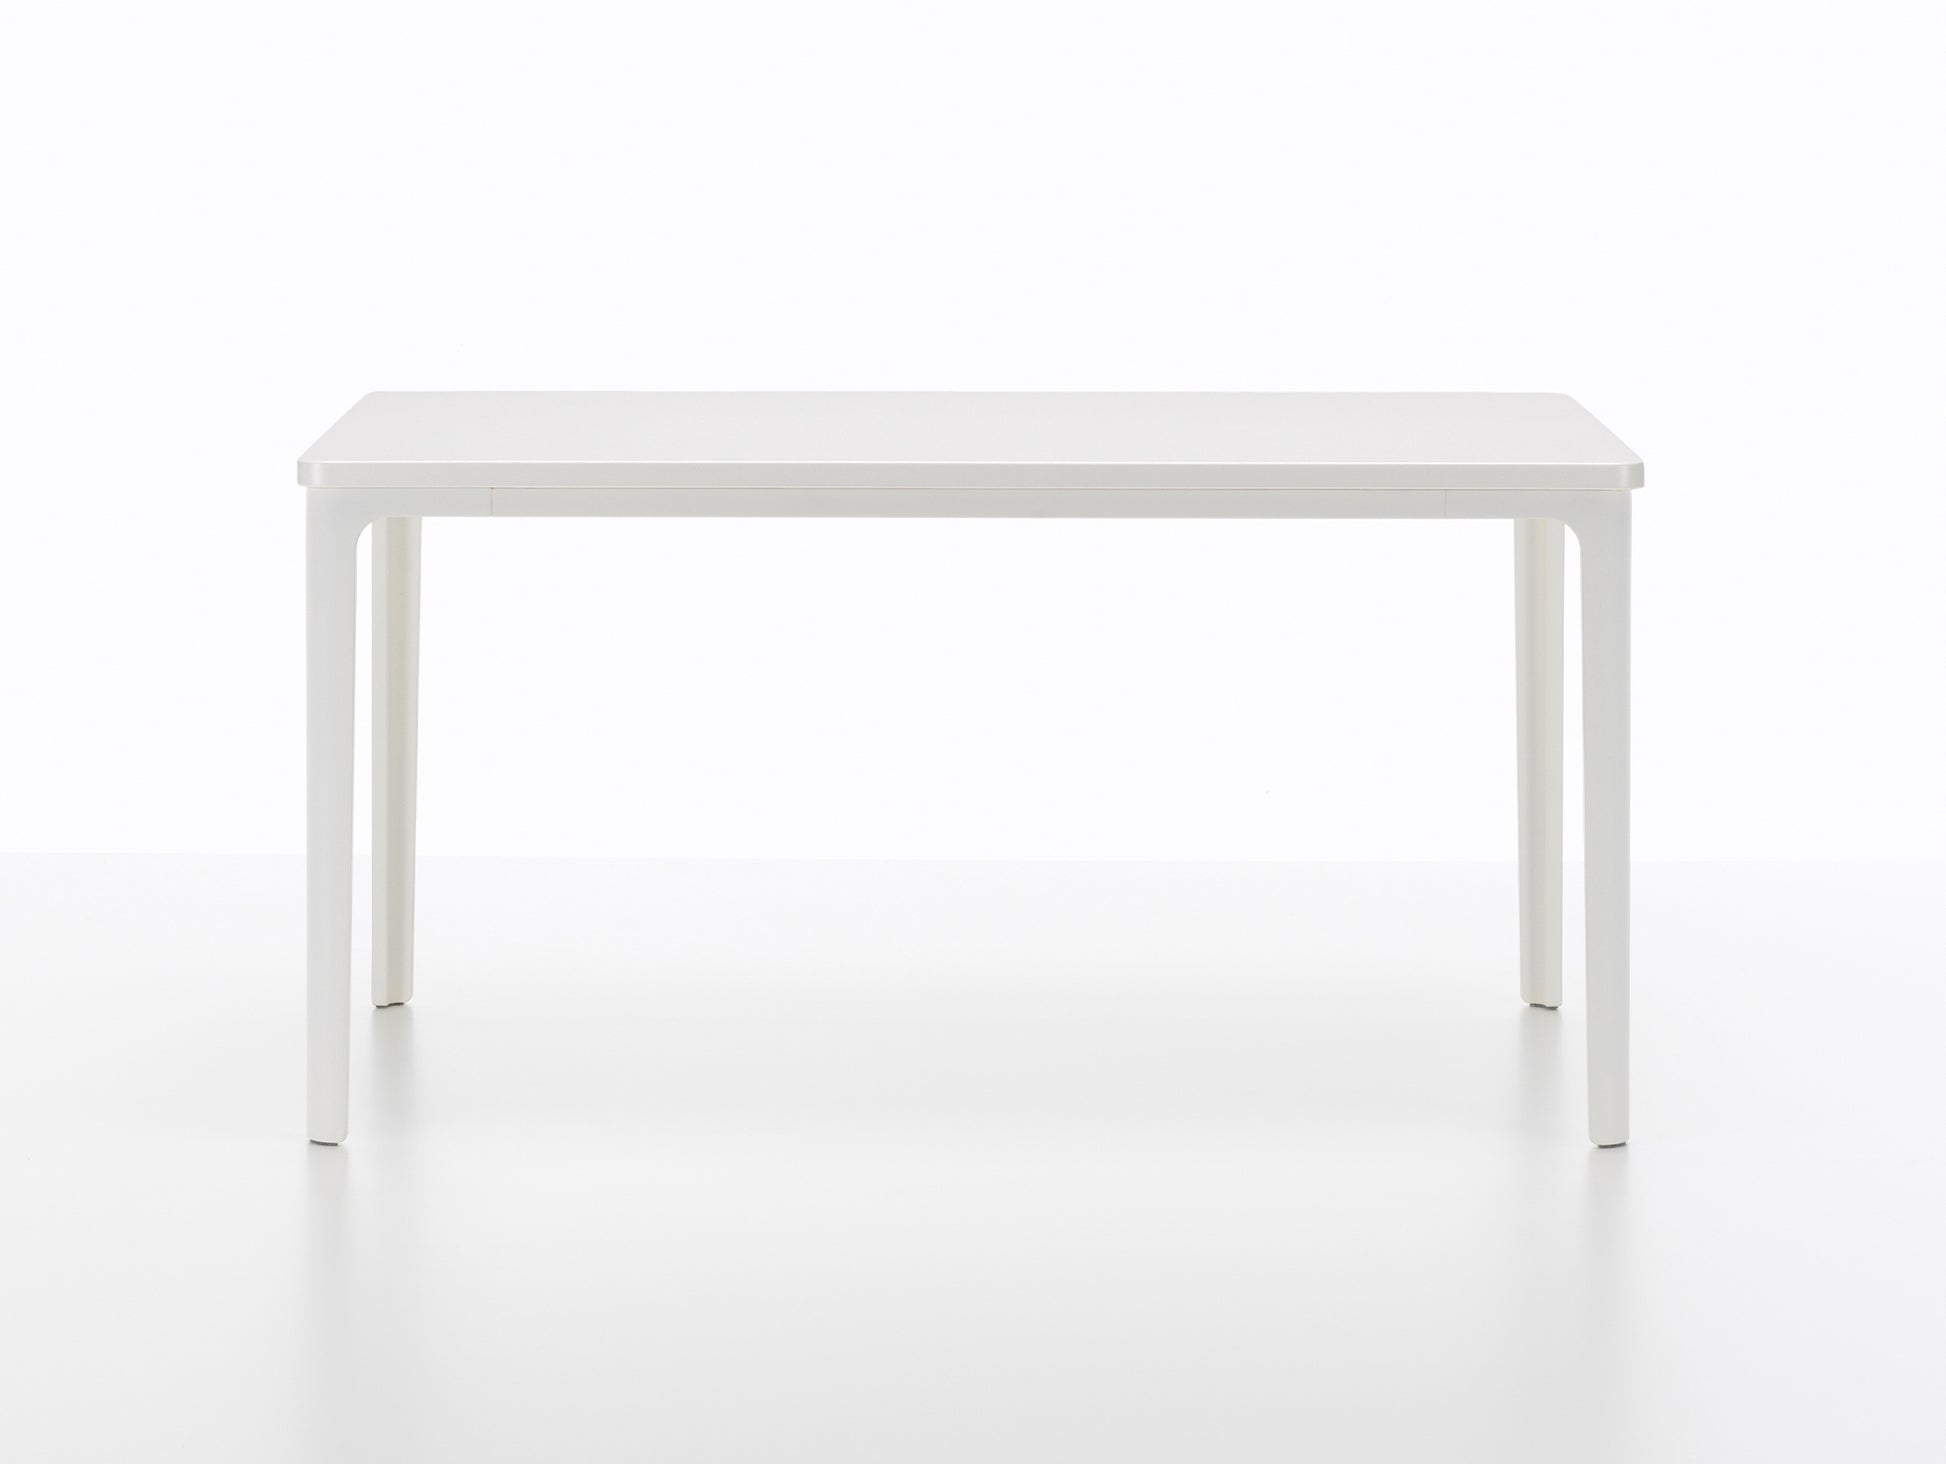 Plate Coffee Table by Vitra - Width: 41 cm / Depth: 71 cm, White Aluminium Base, White MDF Tabletop